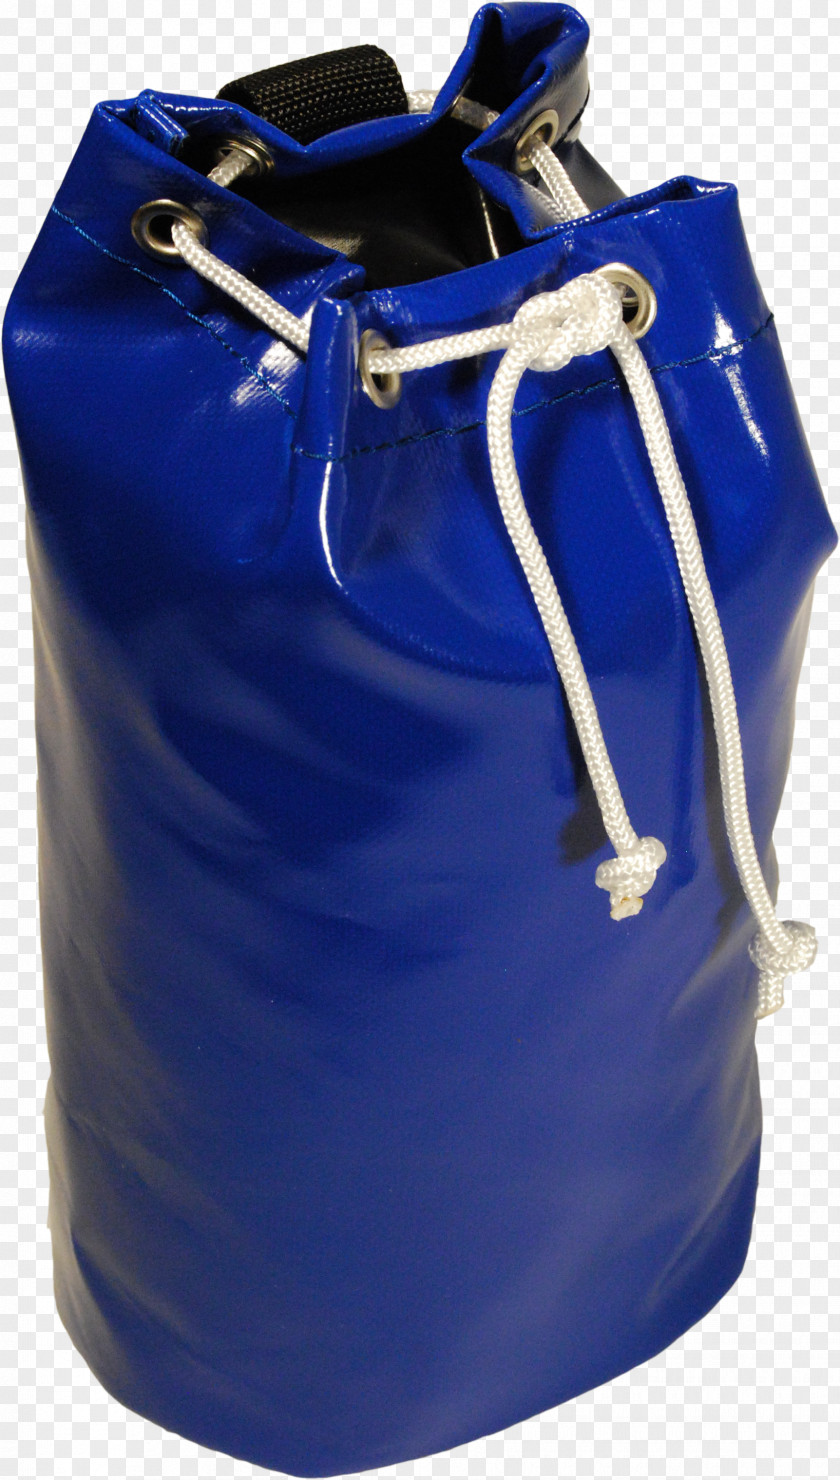 Bag Kitbag MINI Cooper Belt PNG